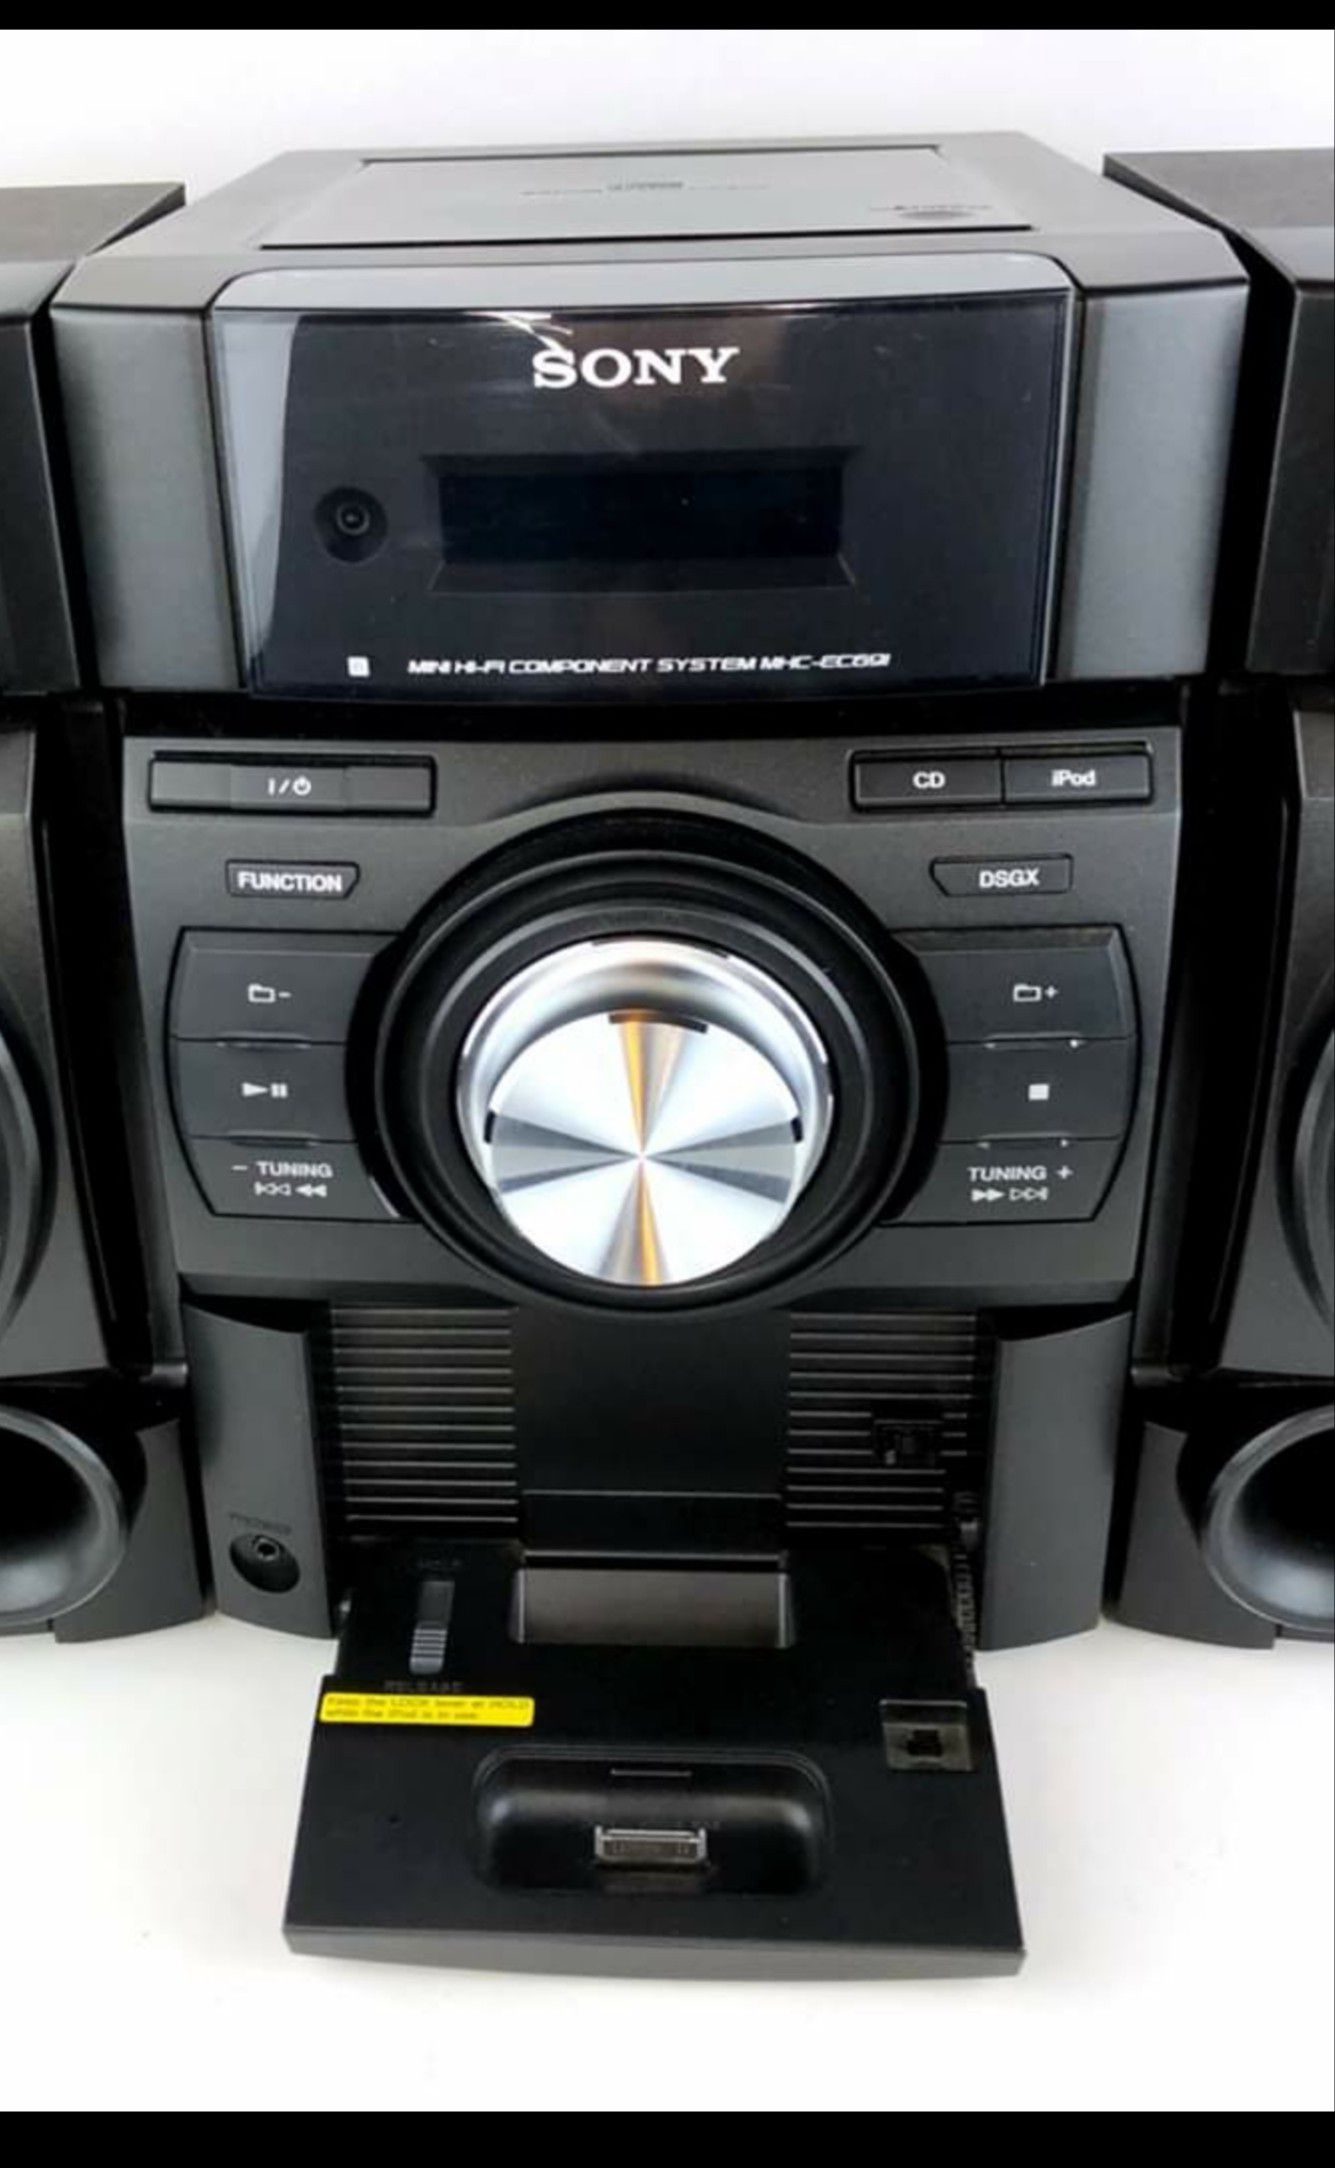 Sony stereo speaker system + radio, black w/ older iPhone/ ipod amount